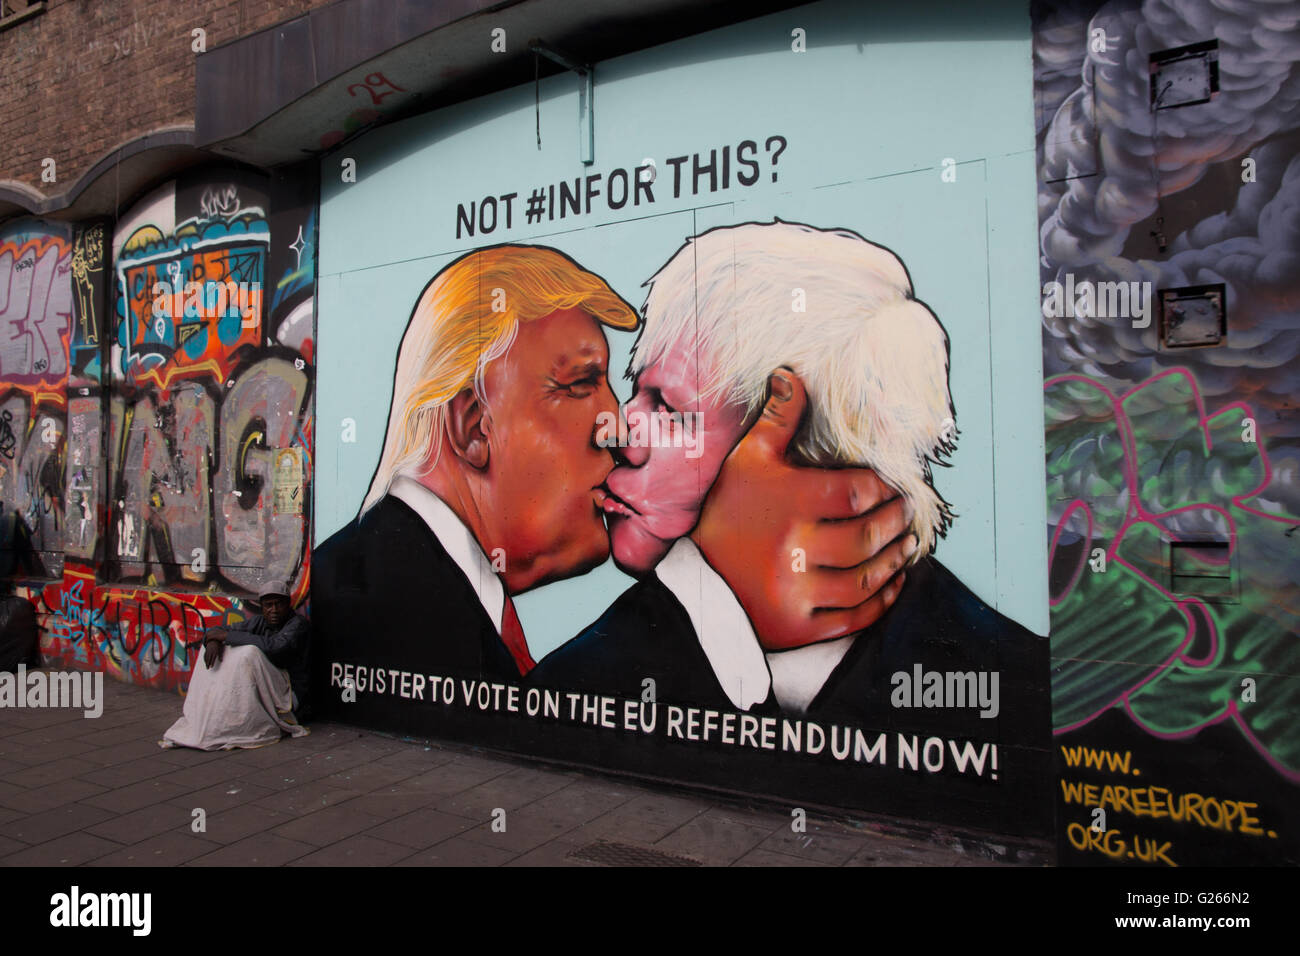 Satirical street art showing Donald Trump kissing Boris Johnson, to encourage people to vote in the 2016 EU referendum. Stock Photo